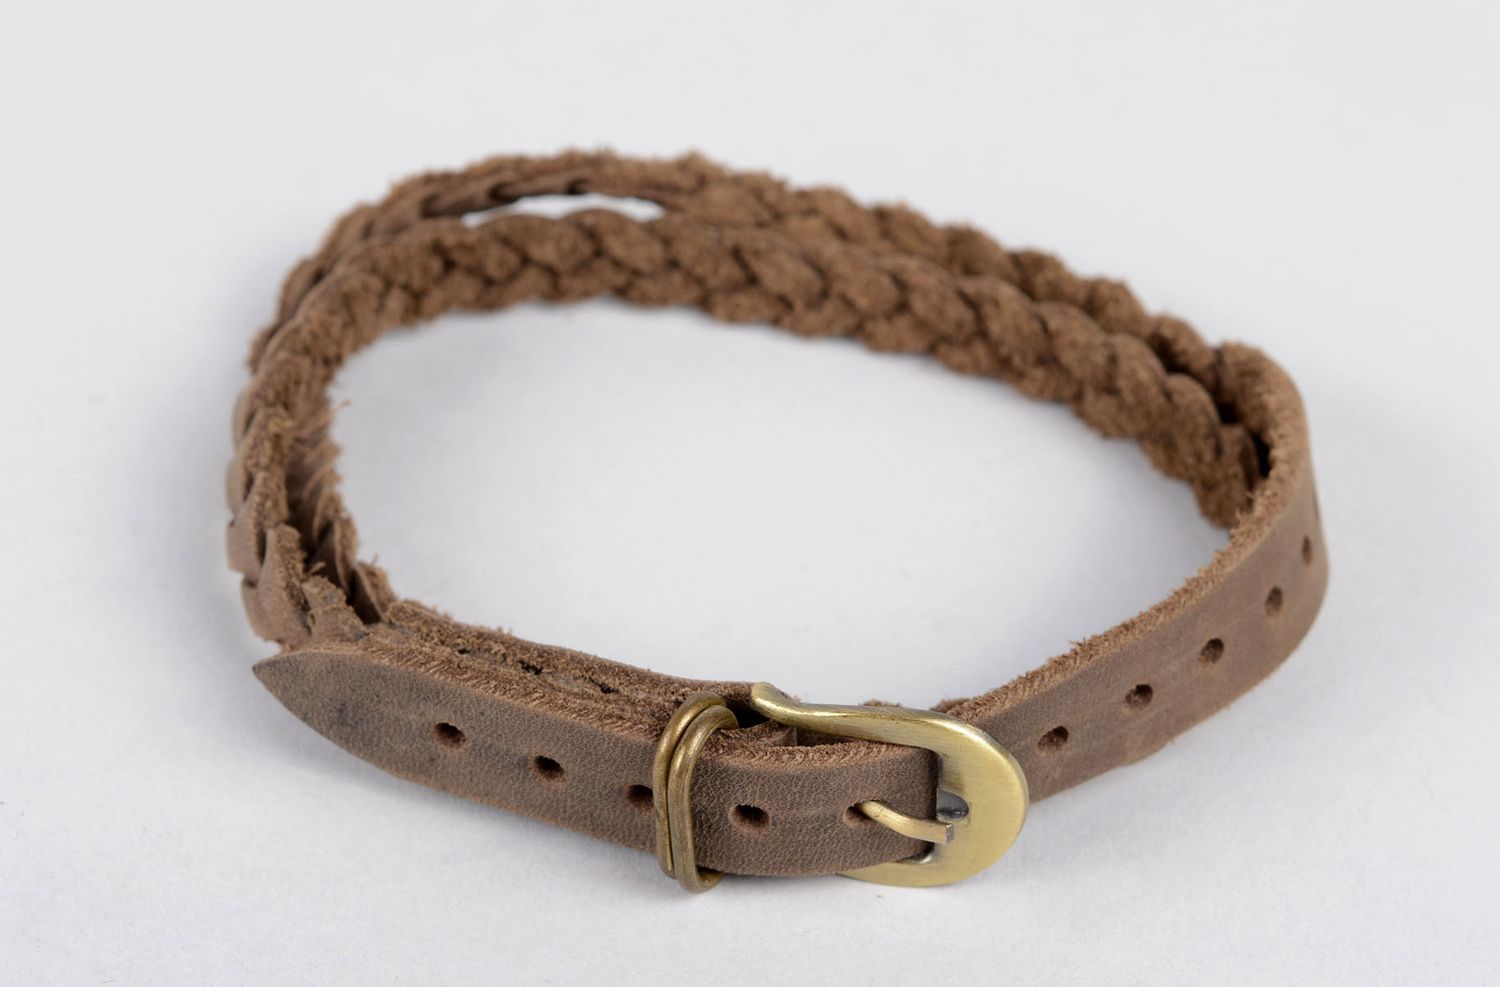 Unusual handmade leather bracelet fashion trends artisan jewelry leather goods photo 3